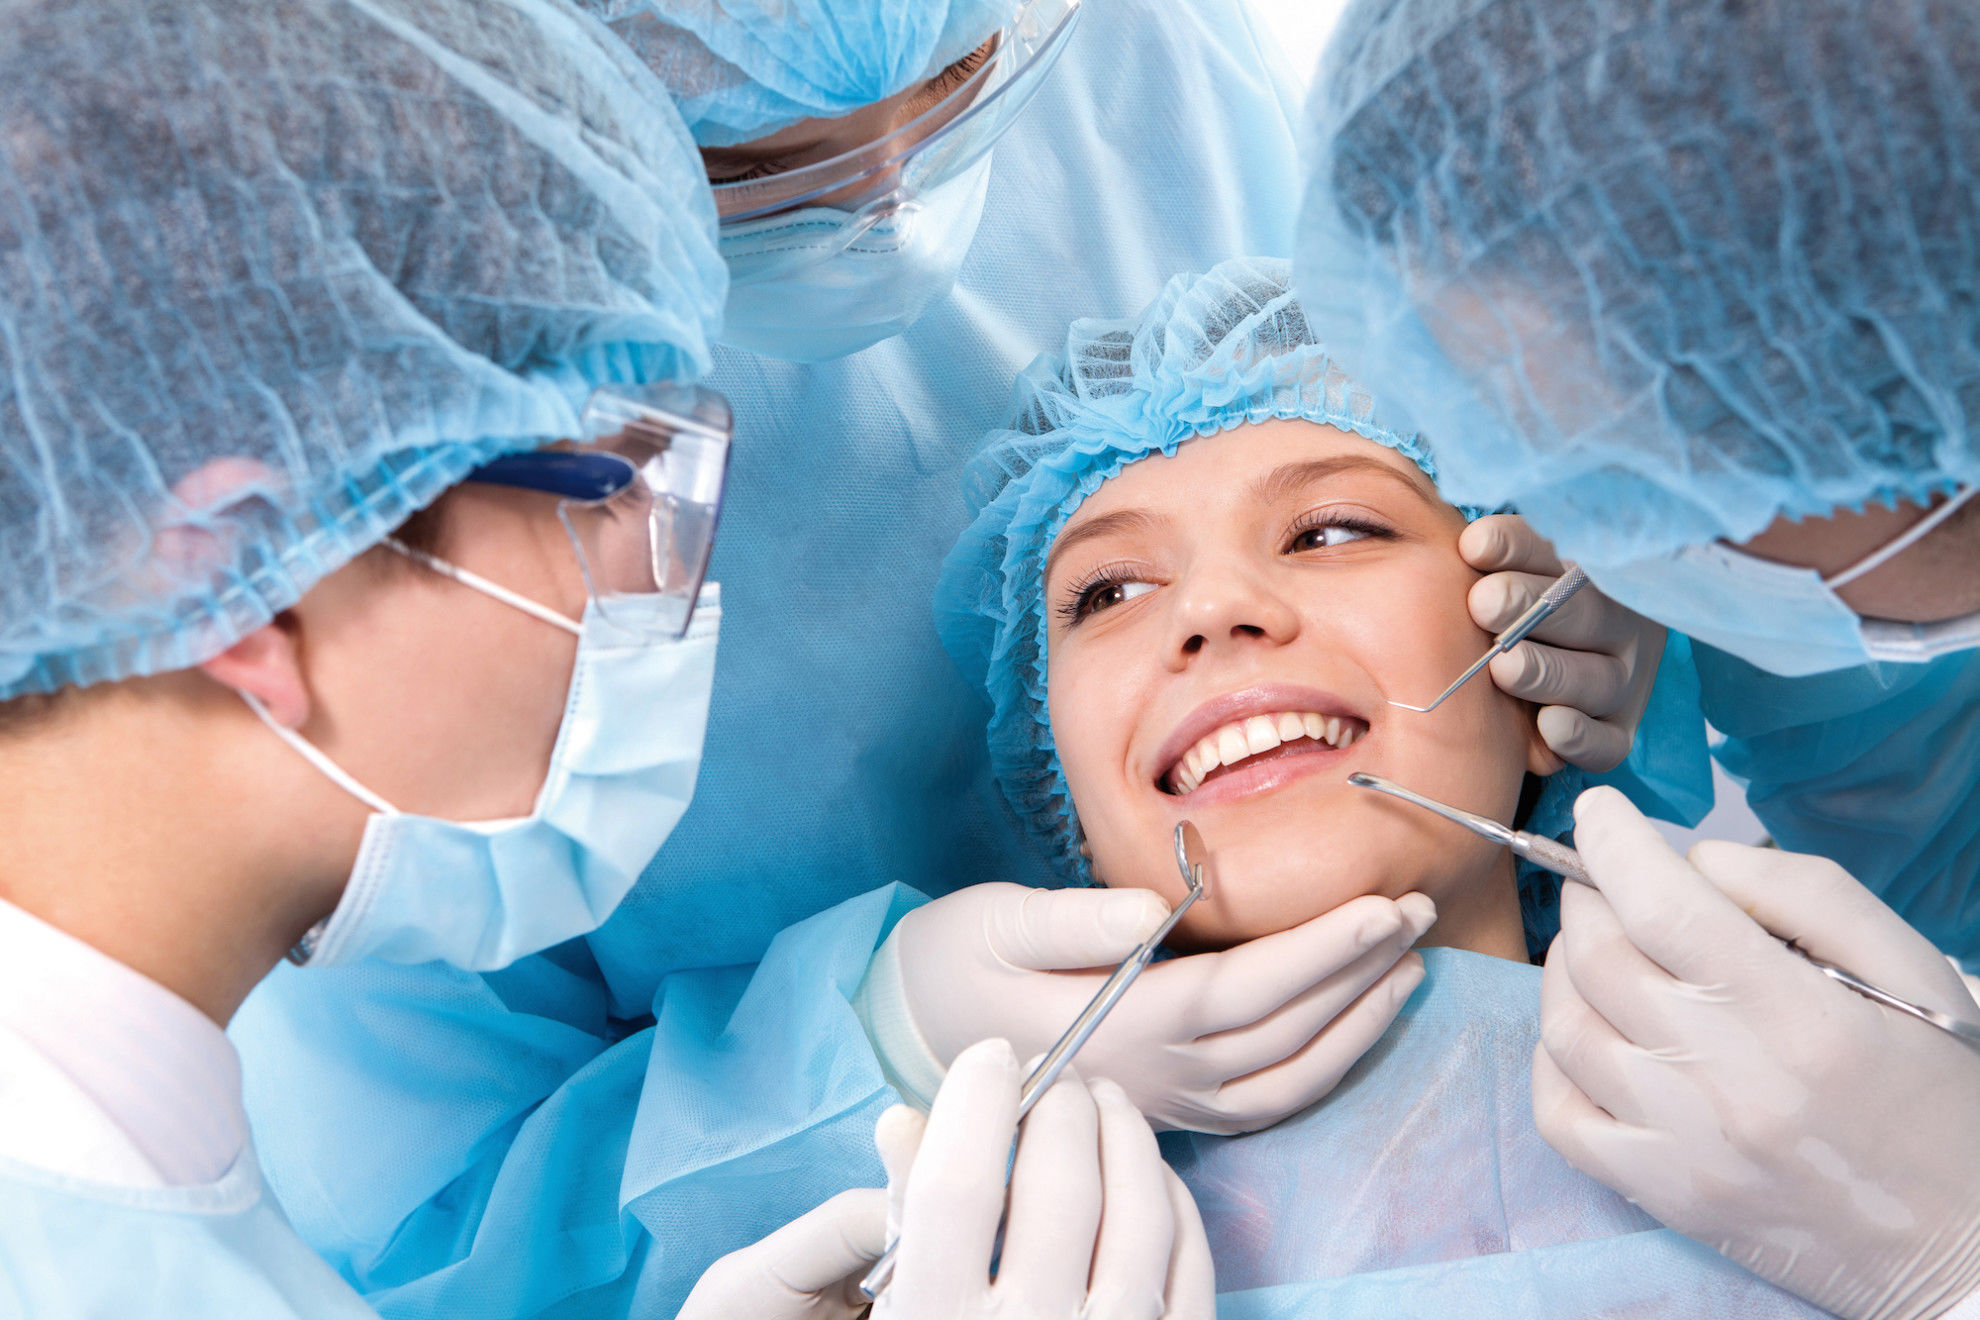 Dental Surgeon